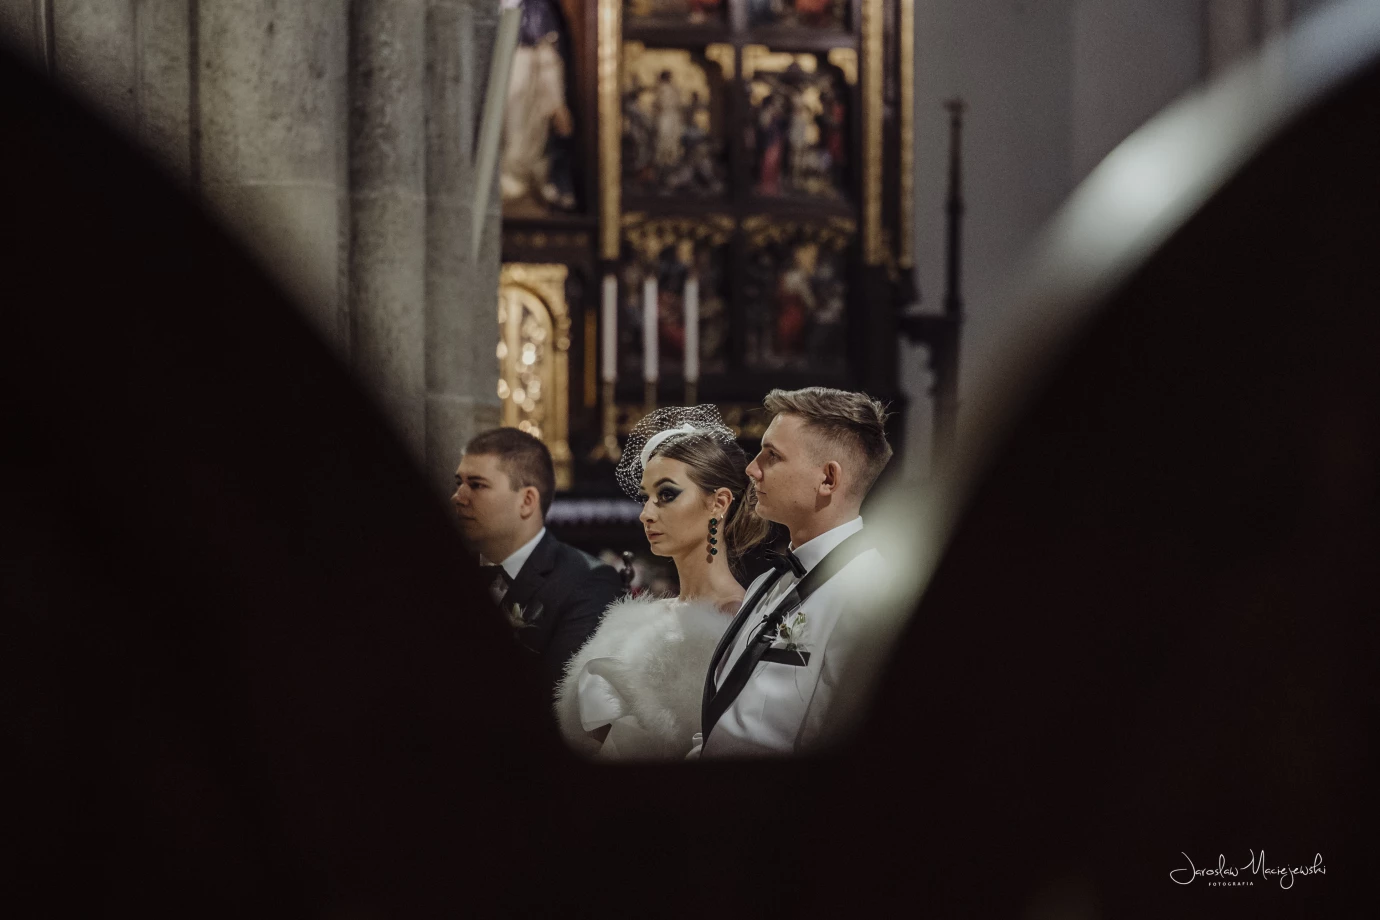 fotograf lodz jaroslaw-maciejewski-fotografia portfolio zdjecia slubne inspiracje wesele plener slubny sesja slubna